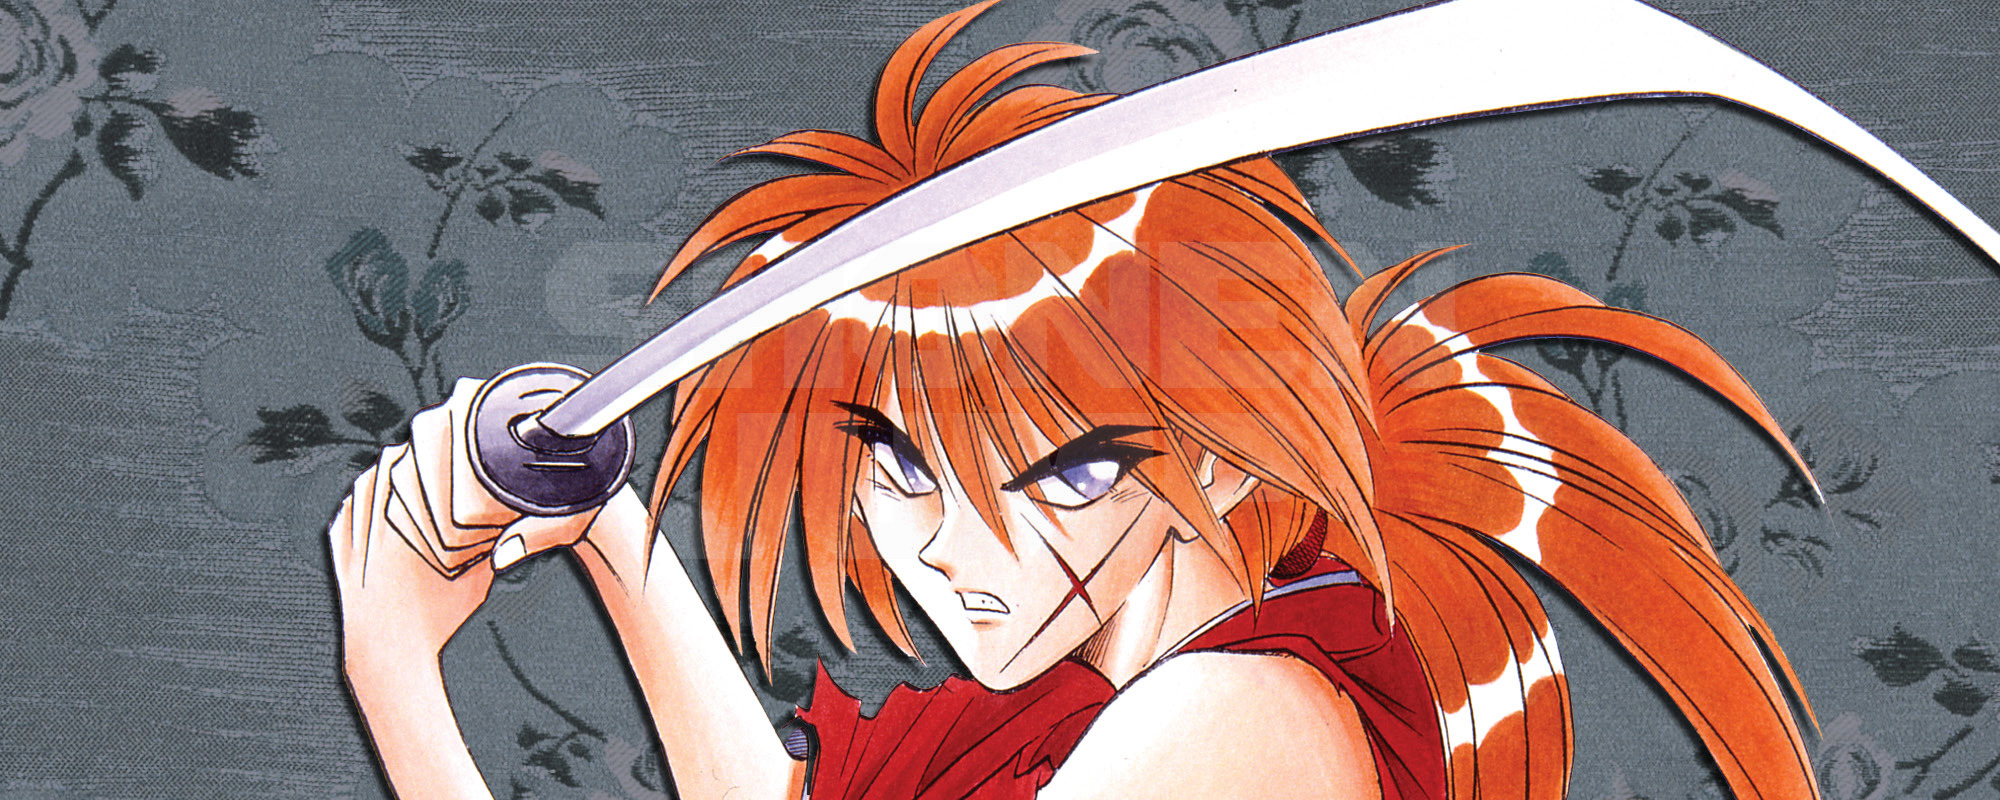 The Tragic RealLife Samurai Who Inspired Rurouni Kenshin